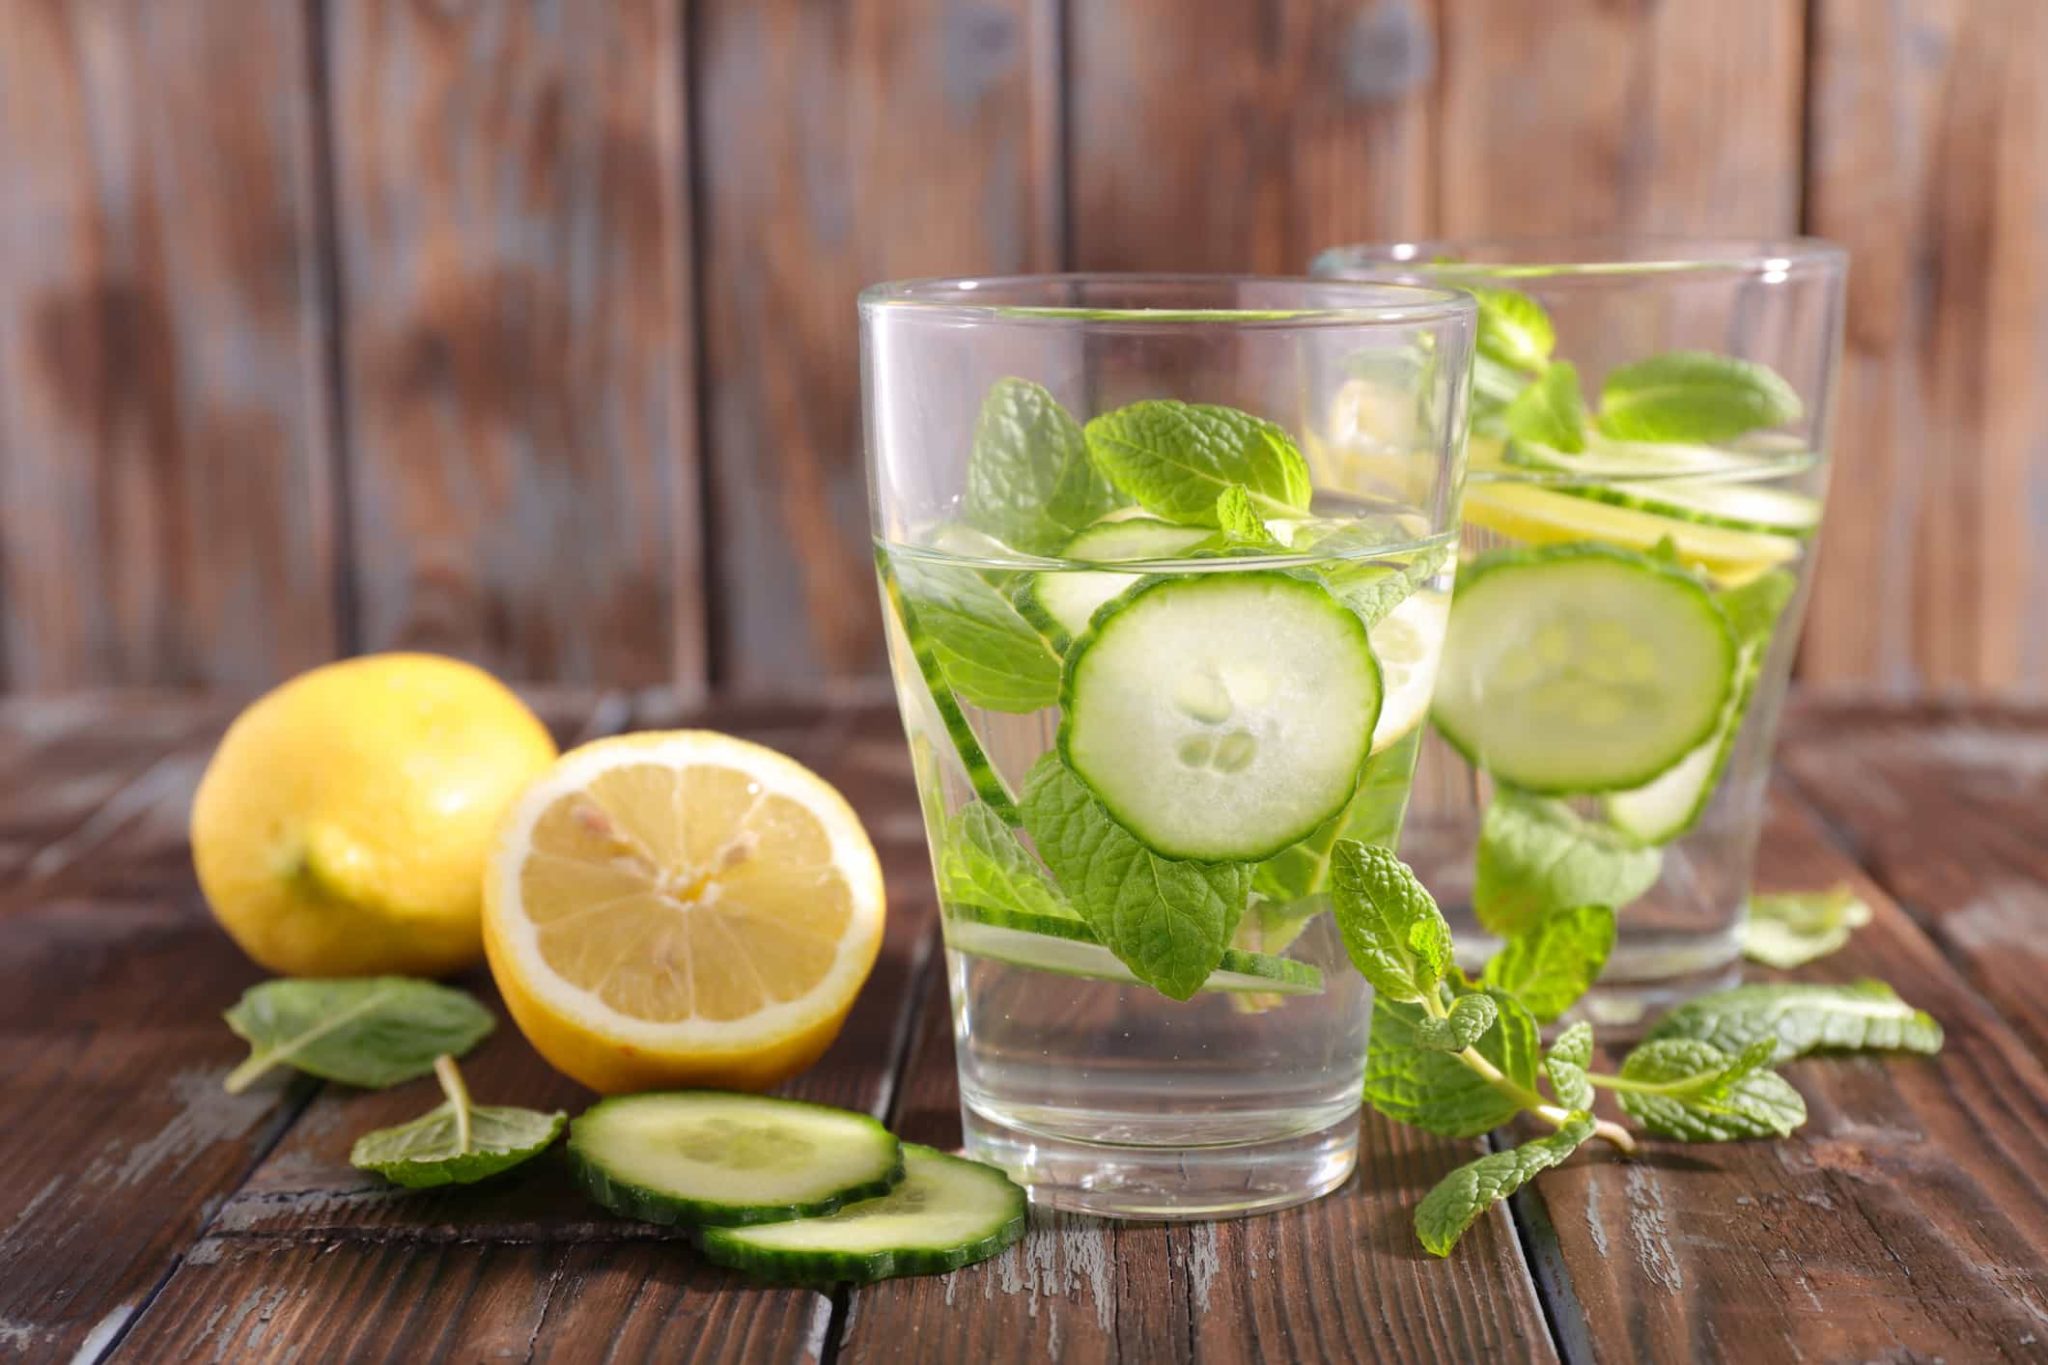 Benefits of Lemon Cucumber Water